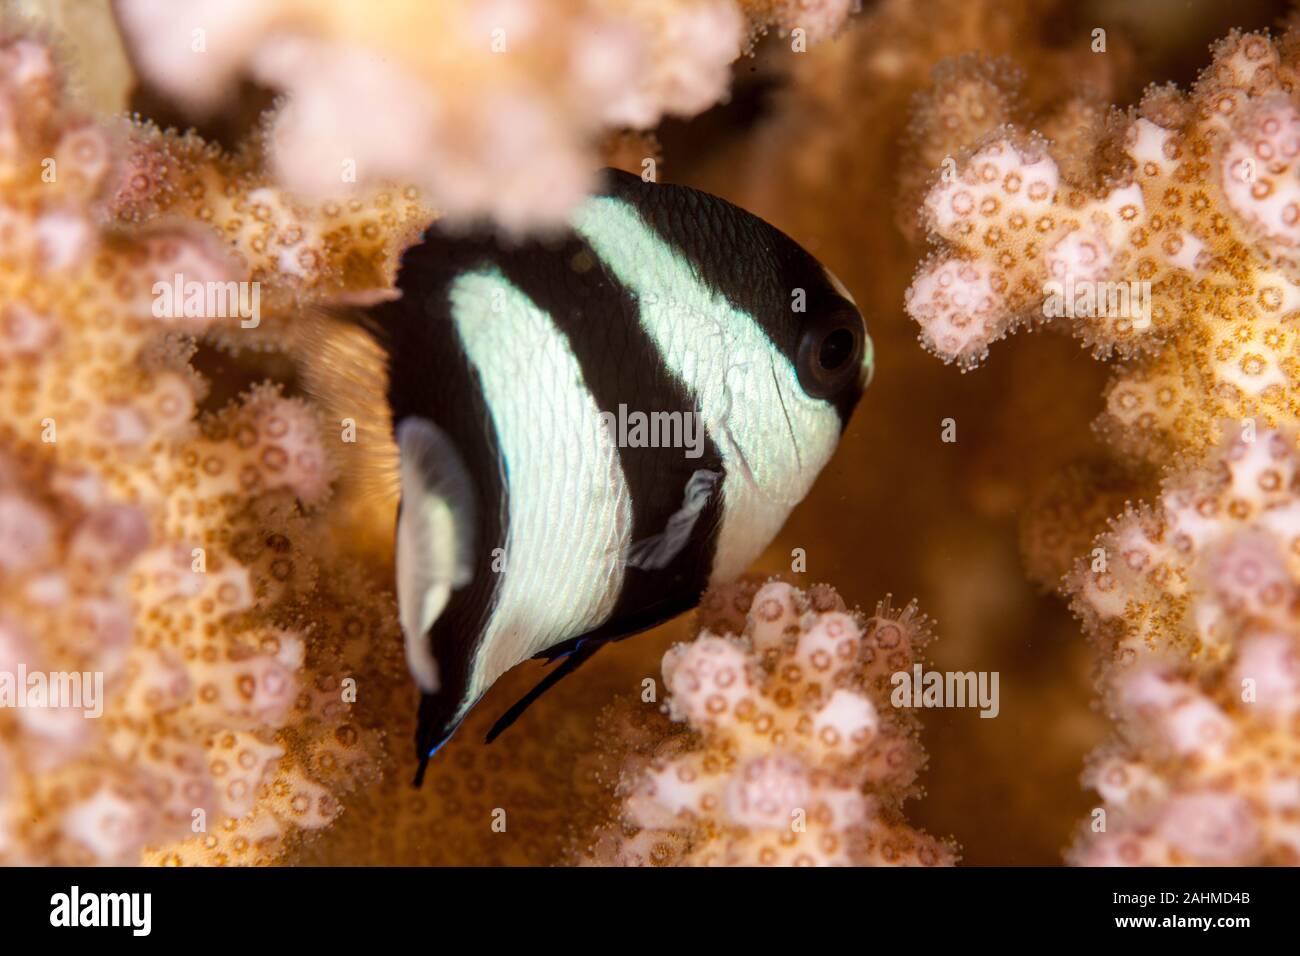 Dascyllus aruanus, known commonly as the whitetail dascyllus or humbug damselfish Stock Photo